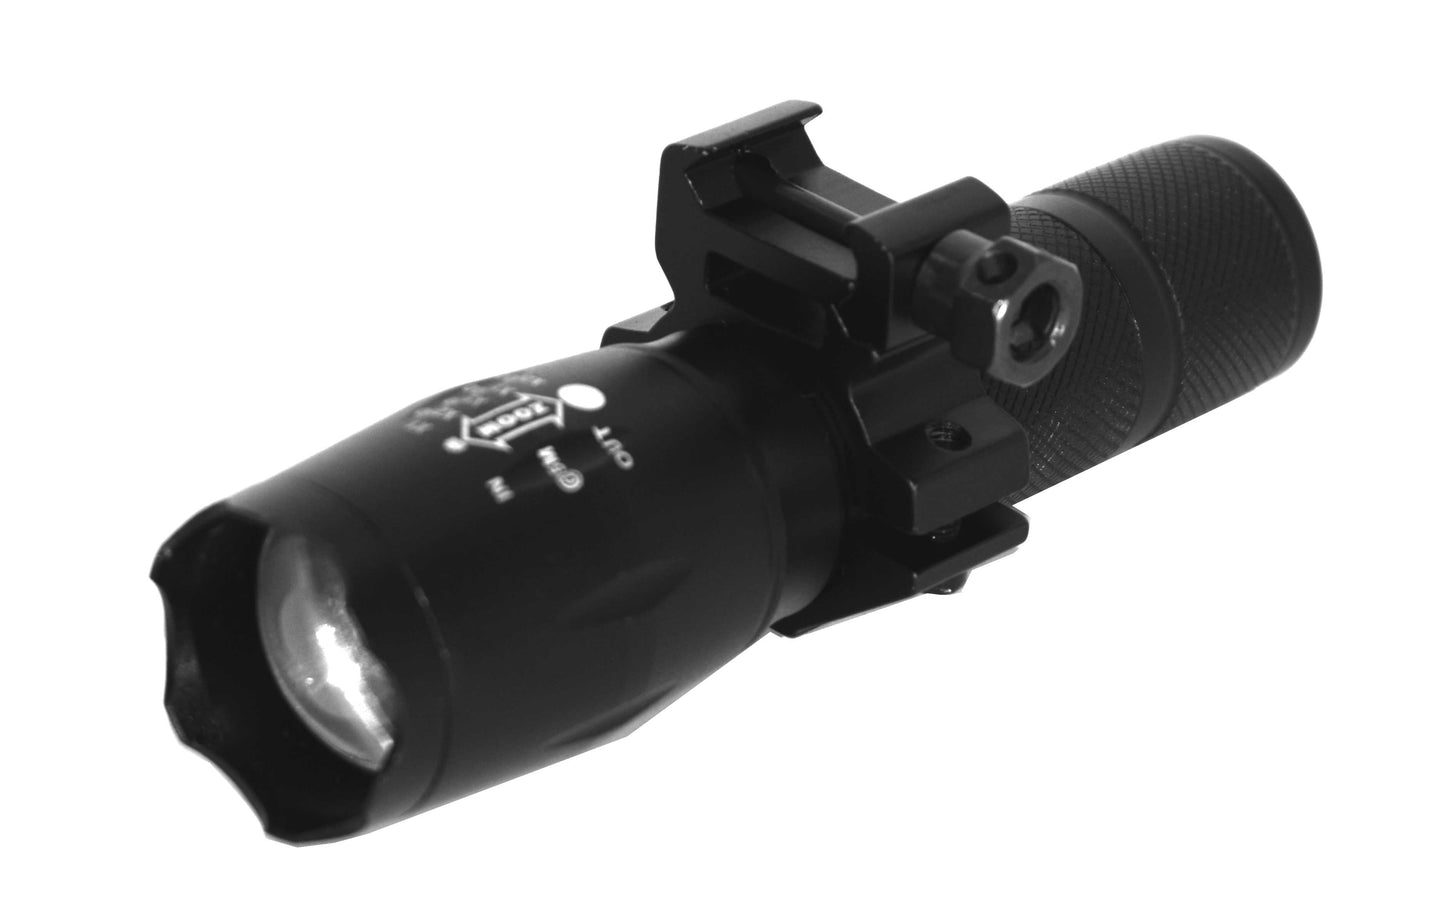 Tactical 1000 Lumen Flashlight With Mount Compatible With Remington 870 12 Gauge Pumps.